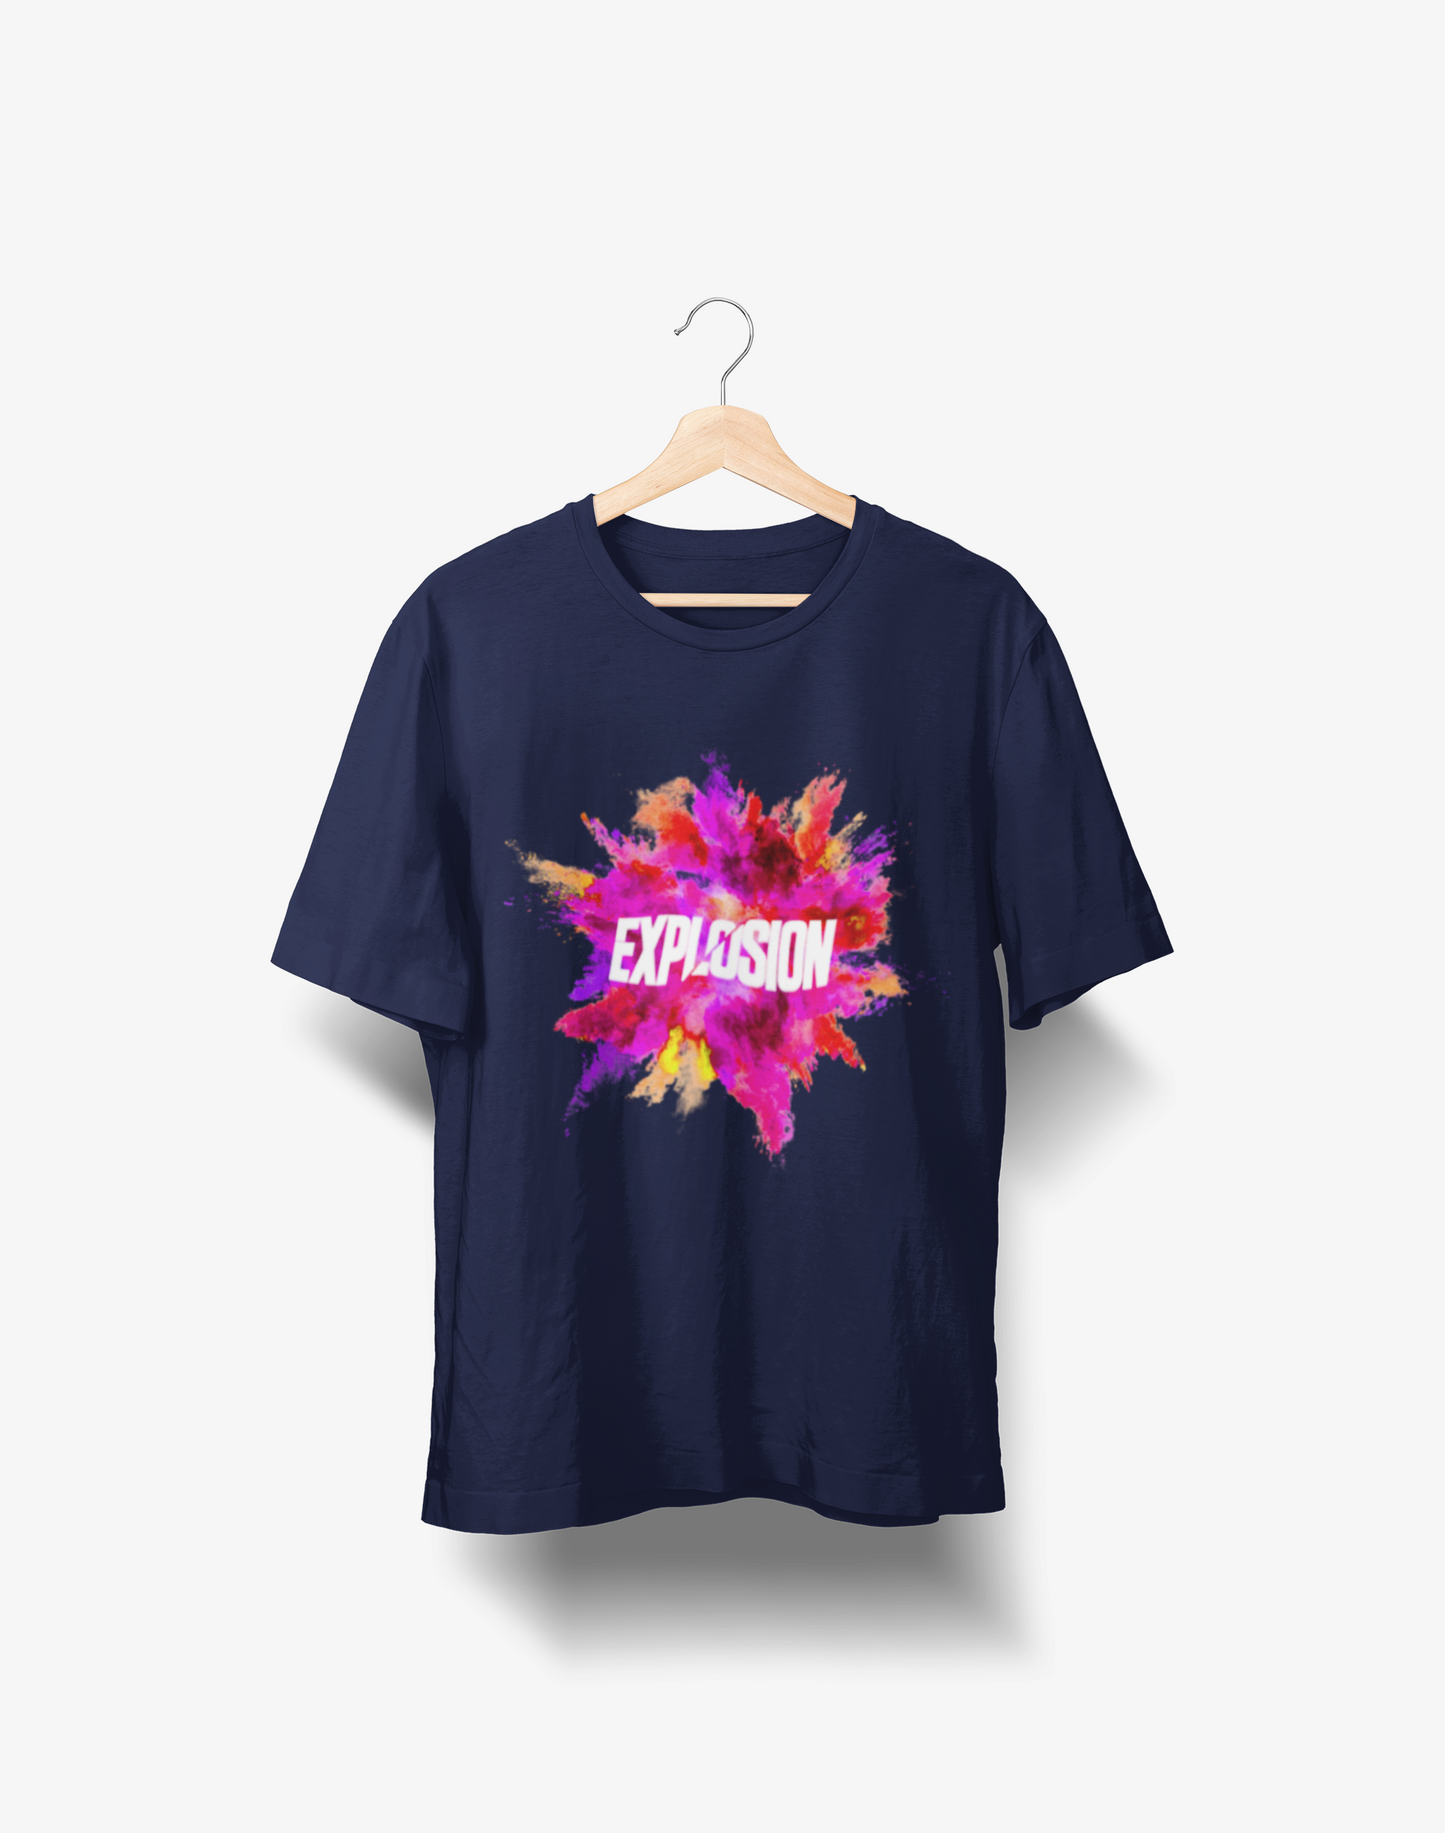 Explosion - T-Shirt